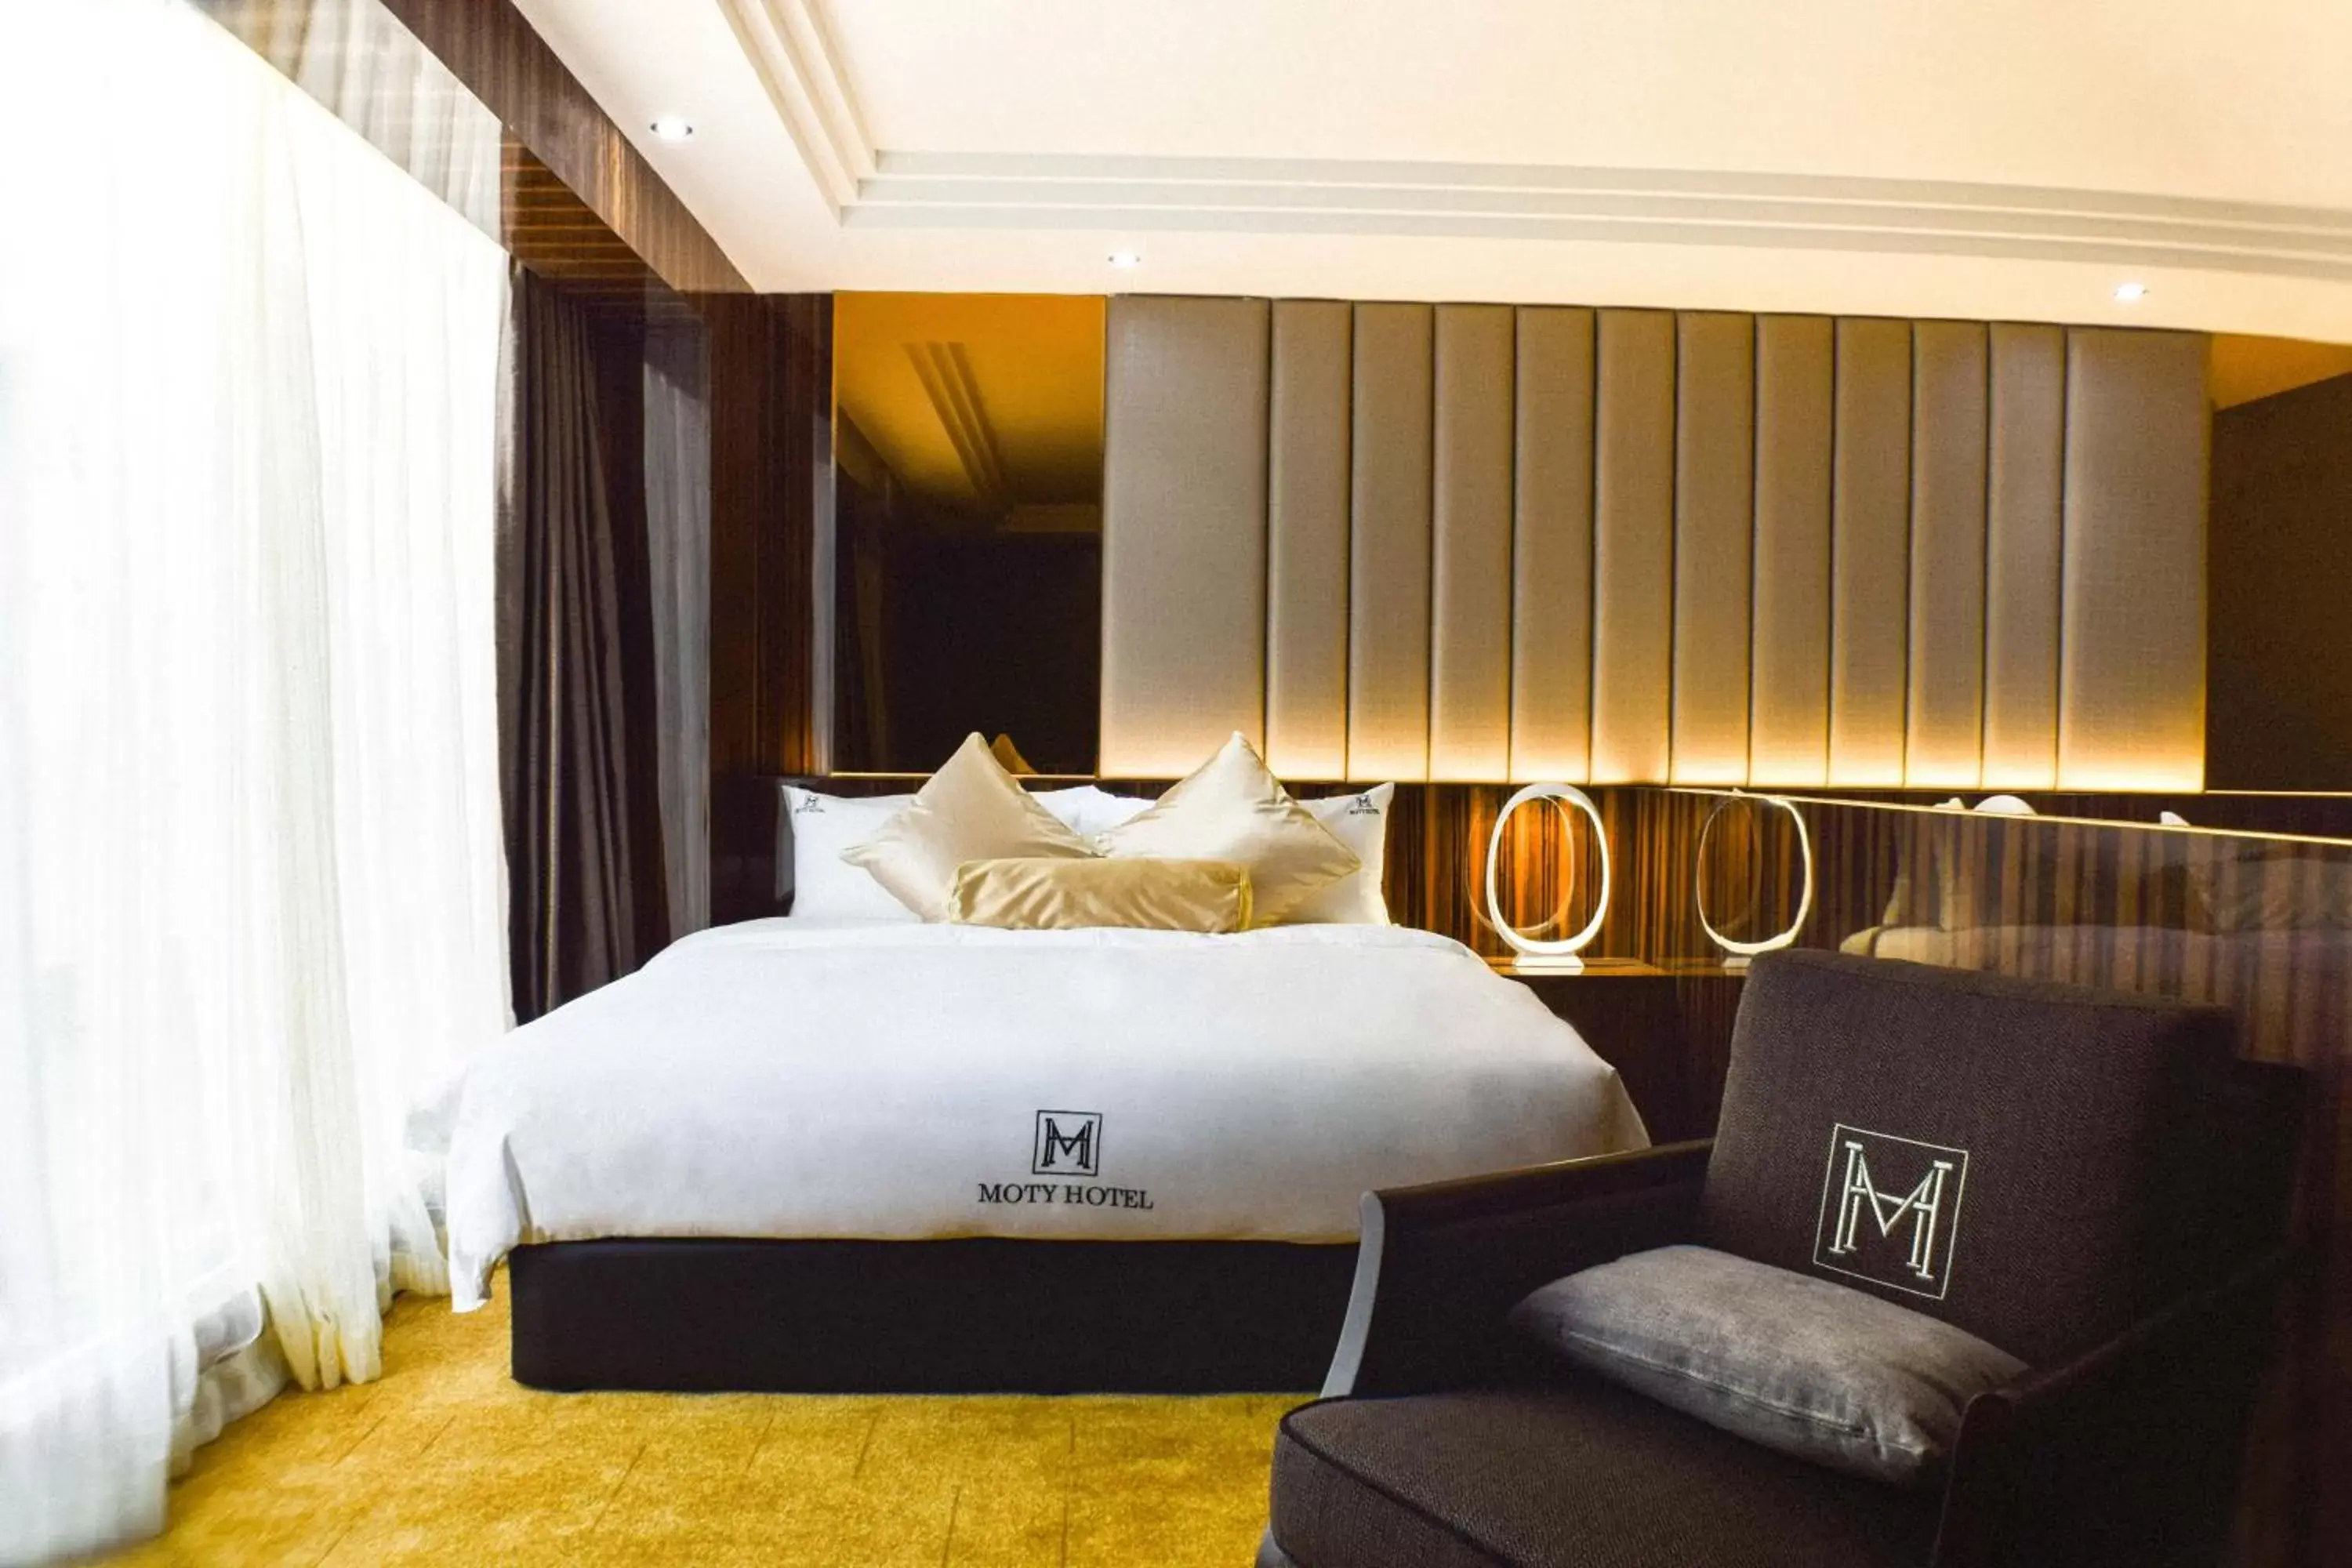 Bed in Moty Hotel